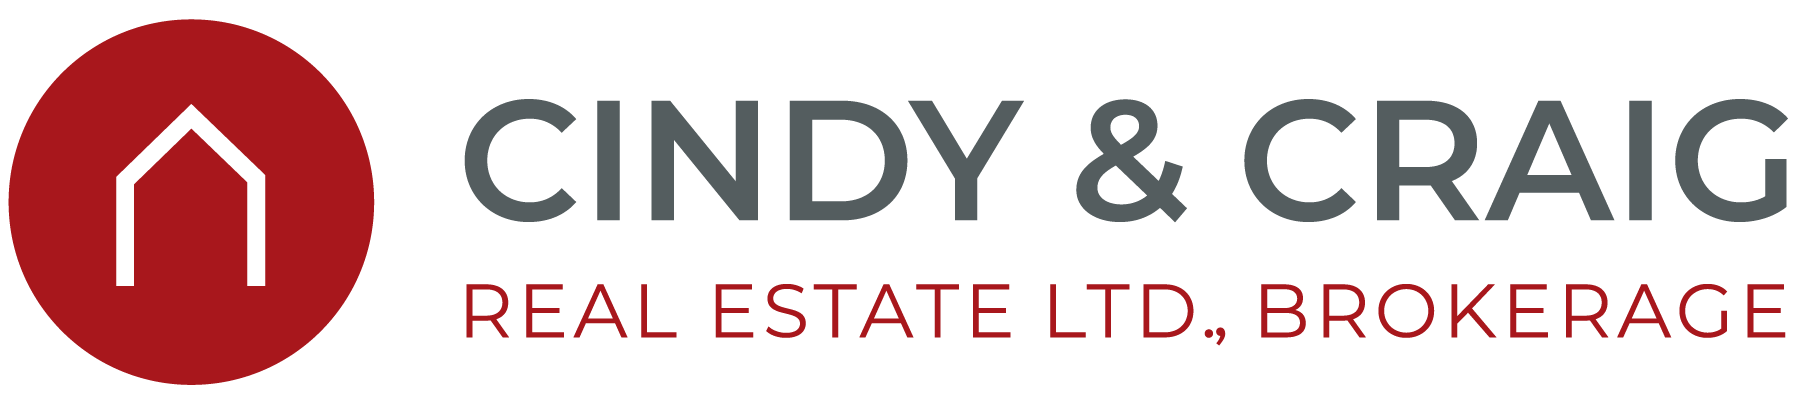 CINDY & CRAIG Real Estate Ltd., Brokerage